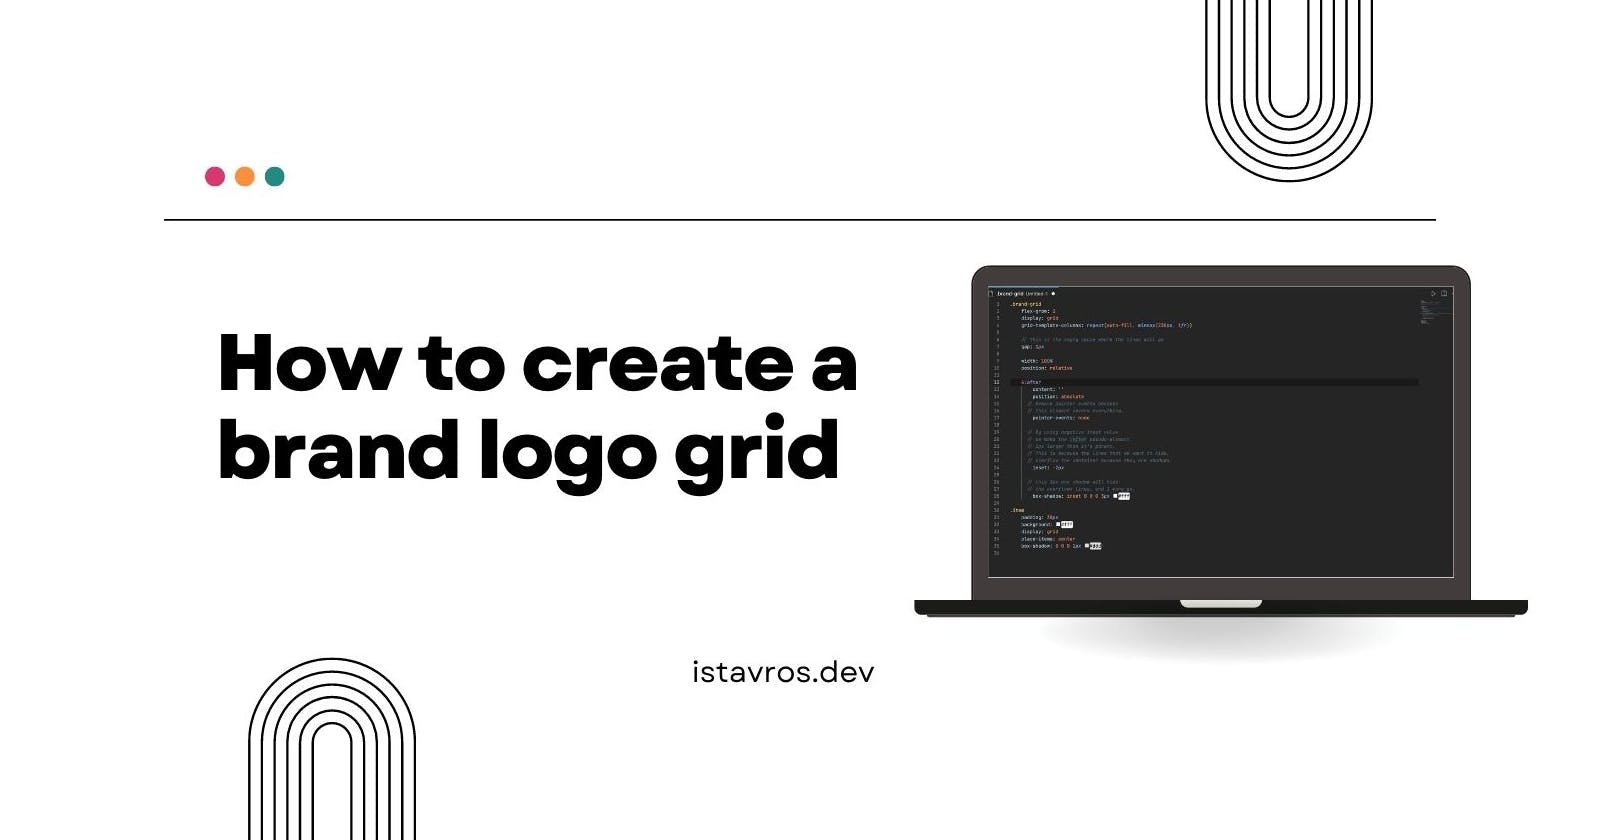 How to create a brand logo grid